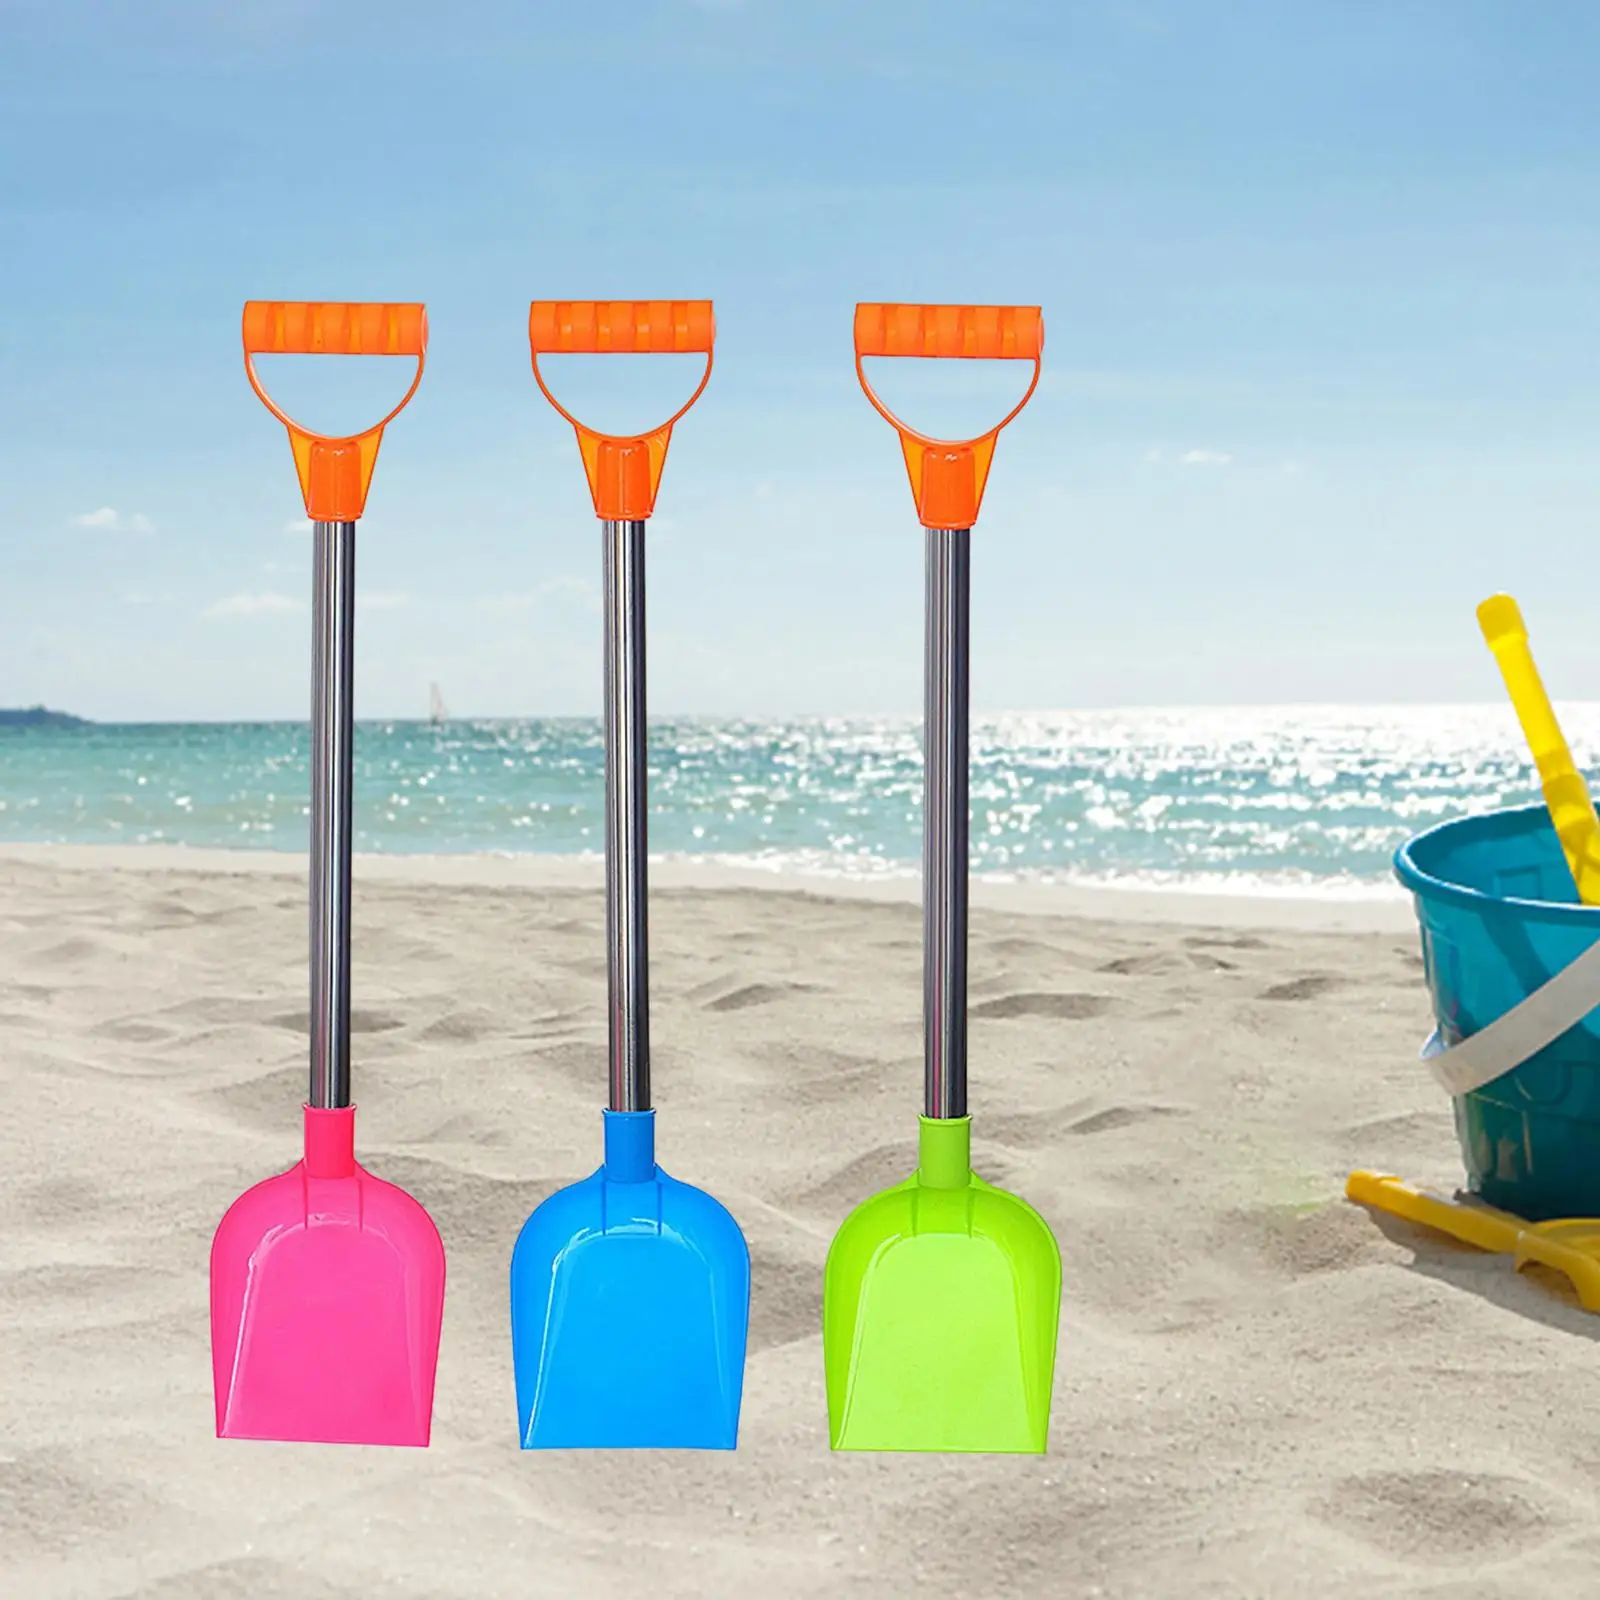 3 Pieces Funny Beach Toys Portable Garden Toy Durable for Birthday Gift Sand